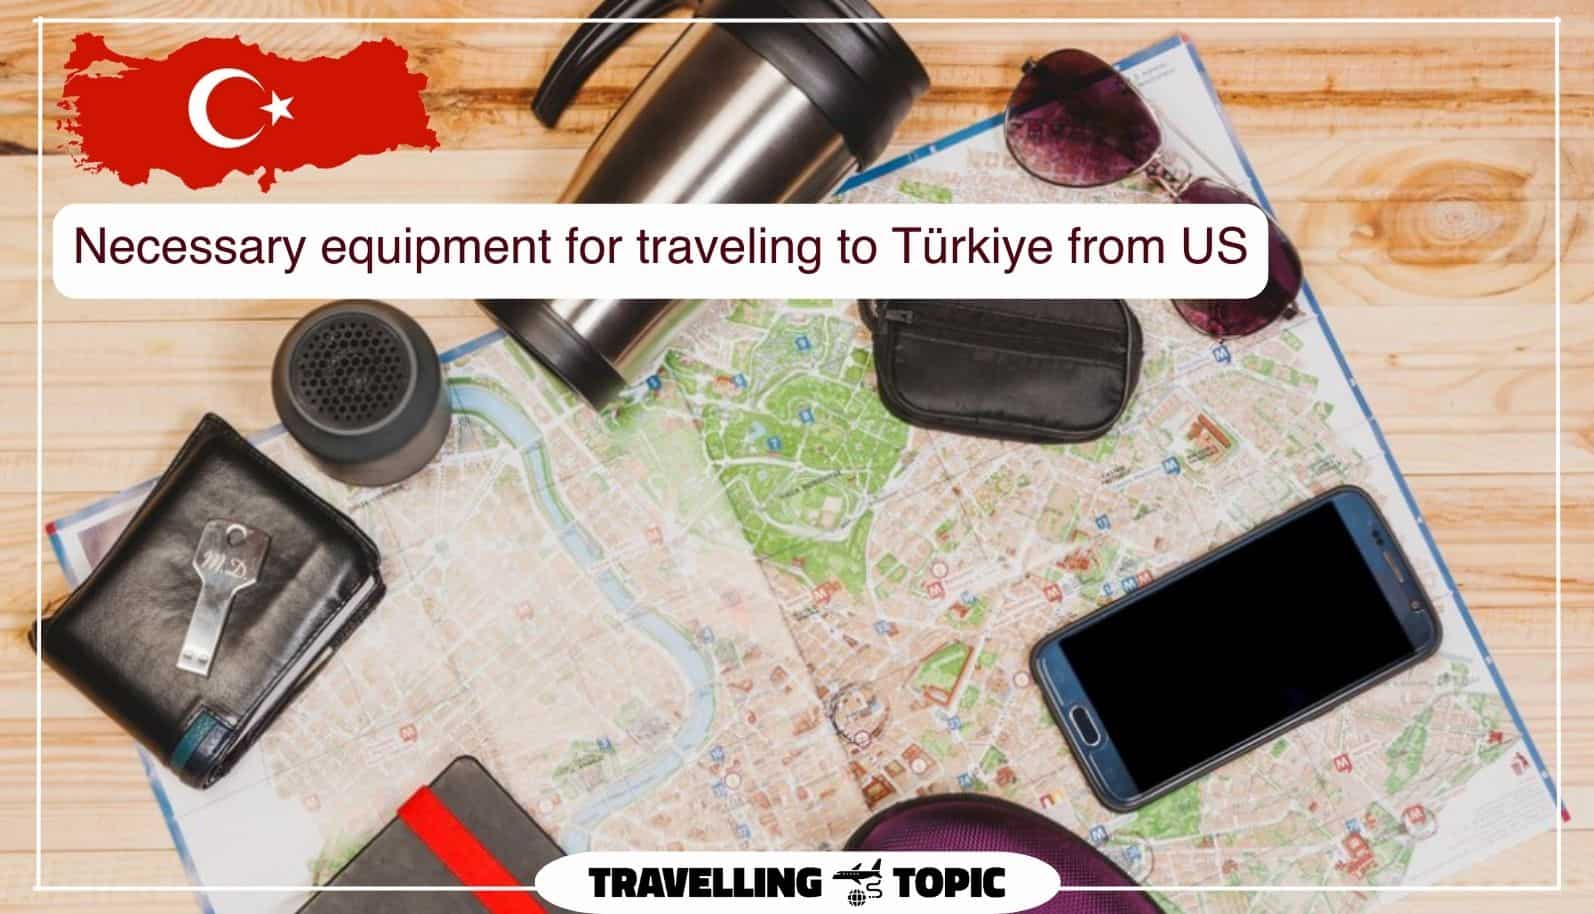 Necessary equipment for traveling to Türkiye from US